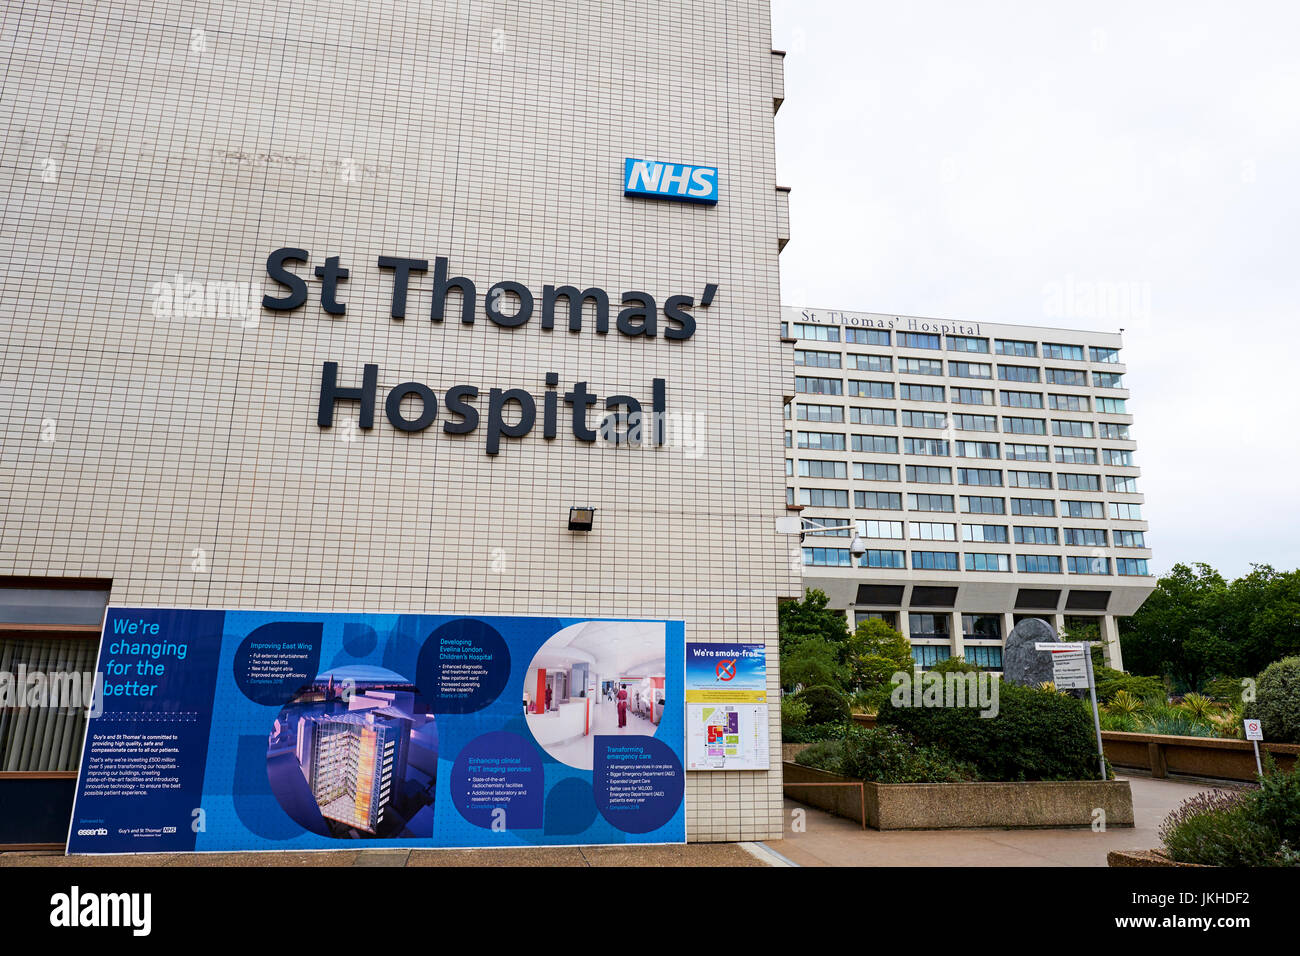 L'Hôpital St Thomas, Westminster, London, UK Banque D'Images